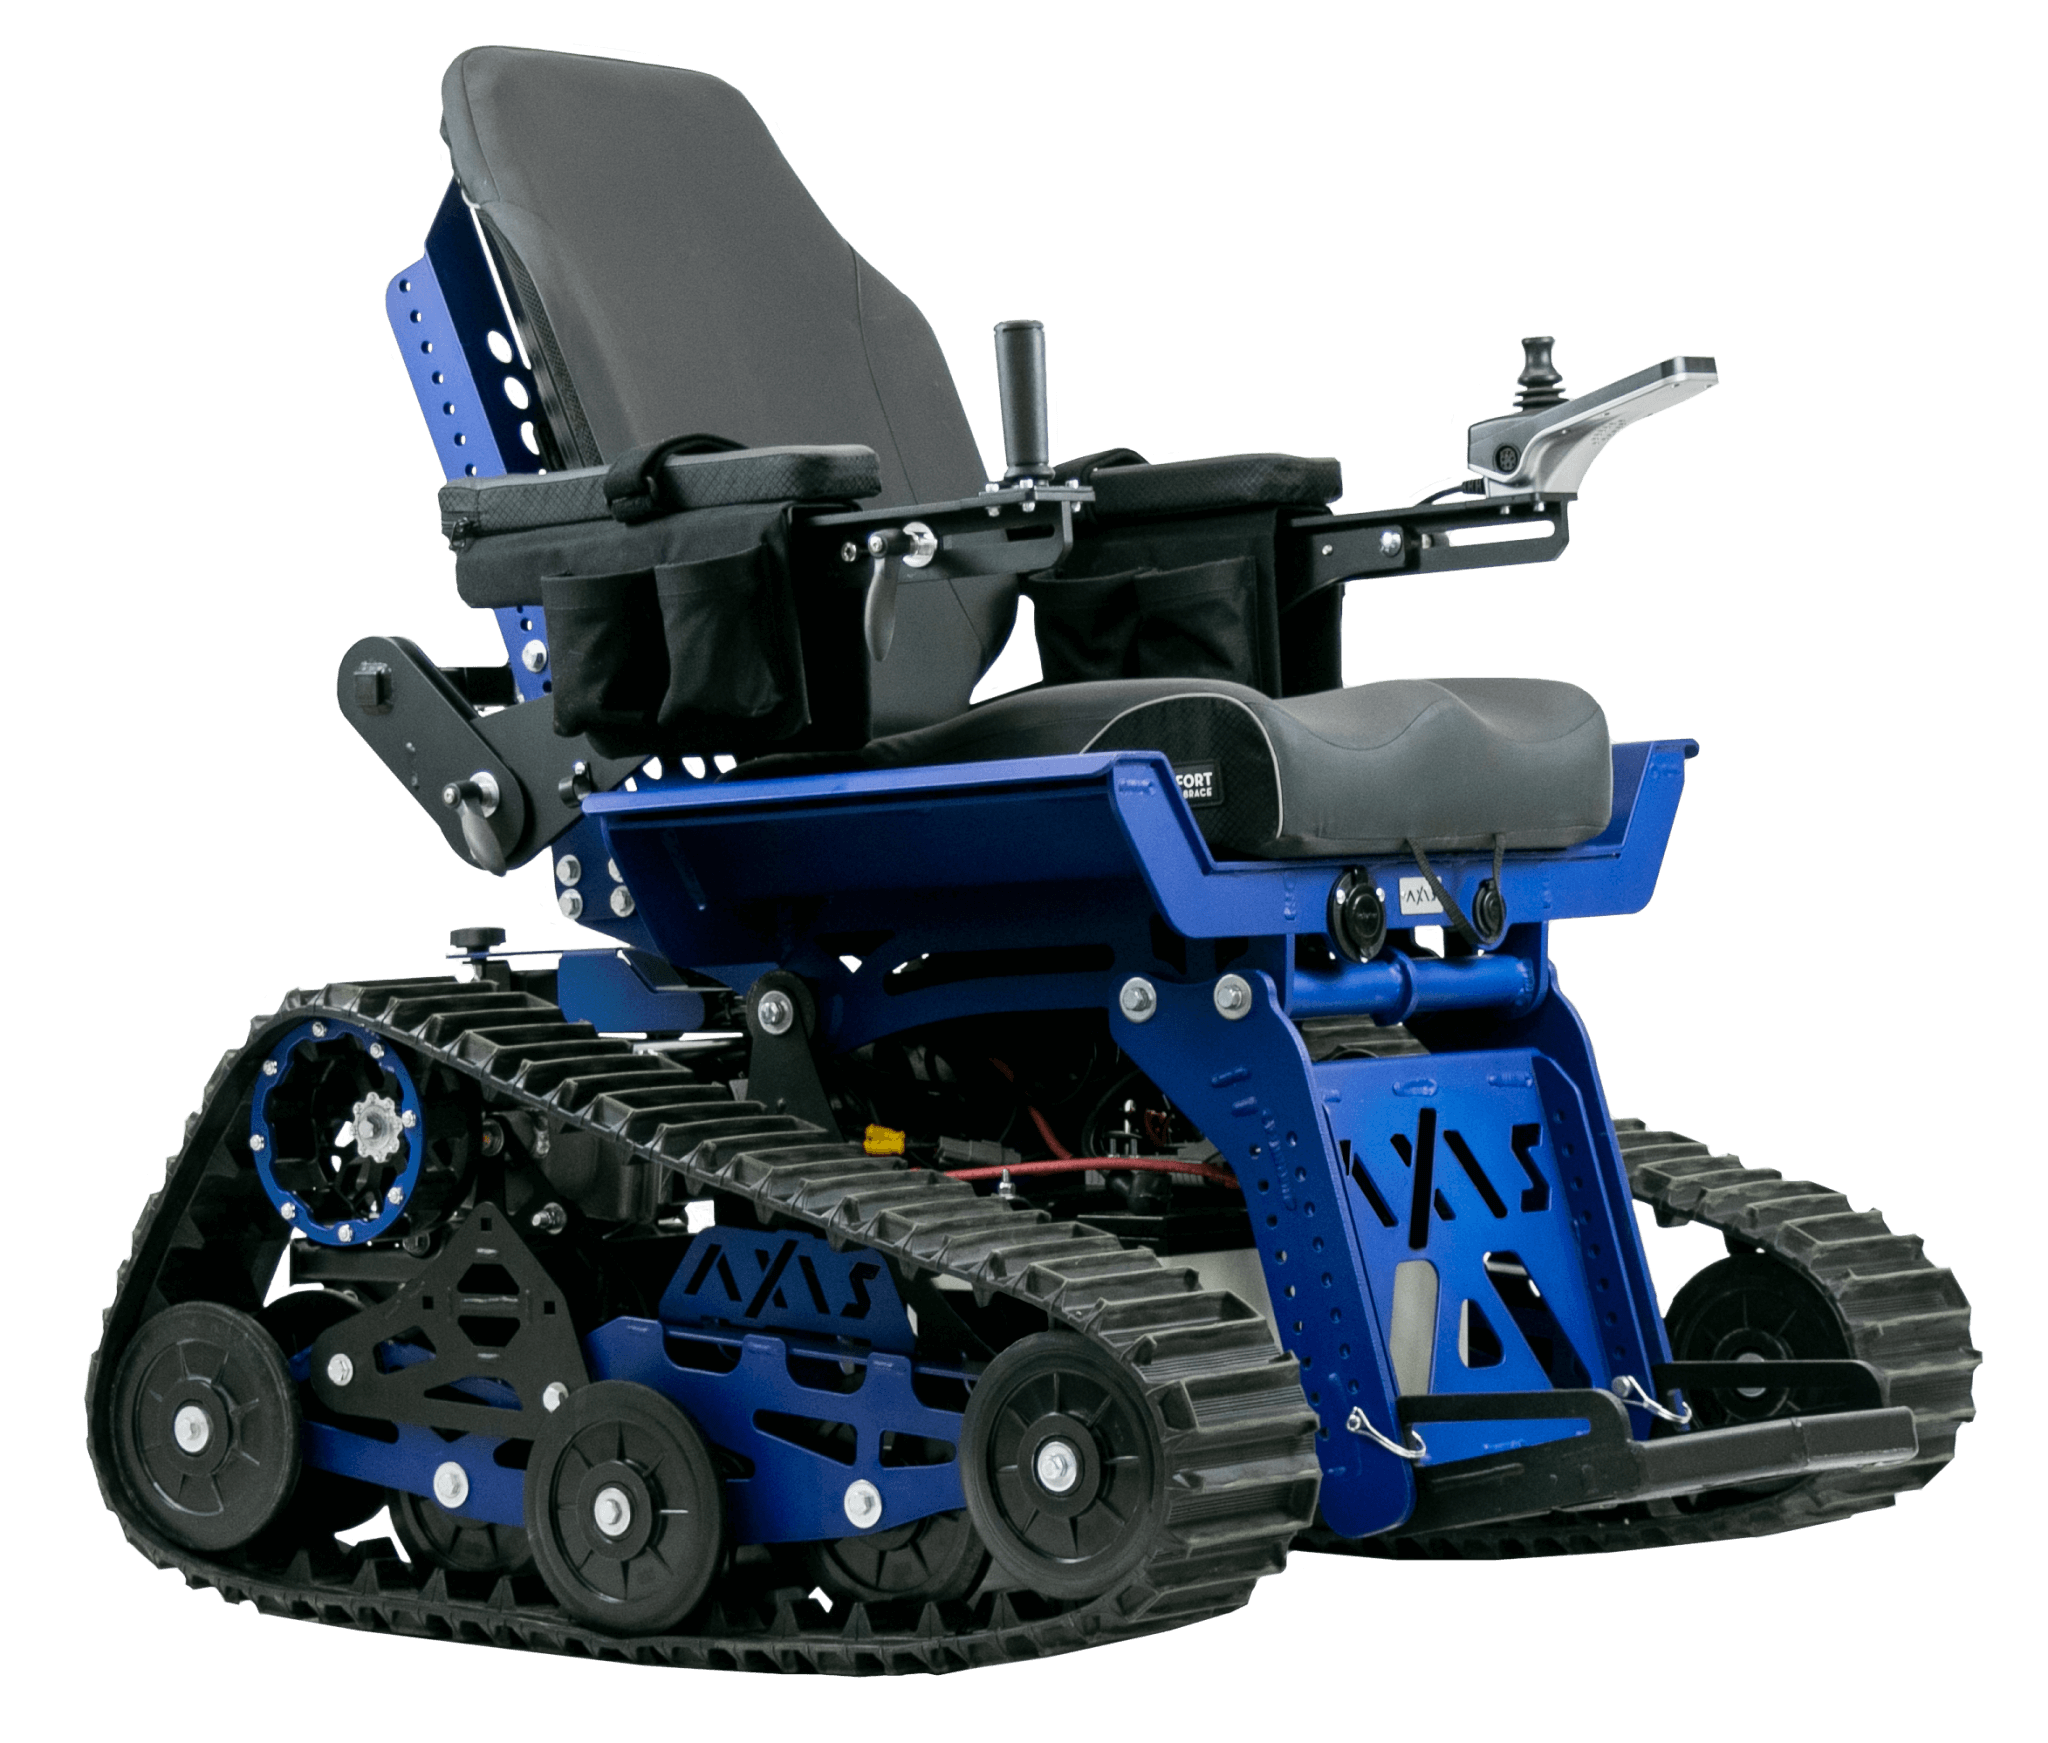 Action Trackchair® AXIS 40 All Terrain Wheelchair